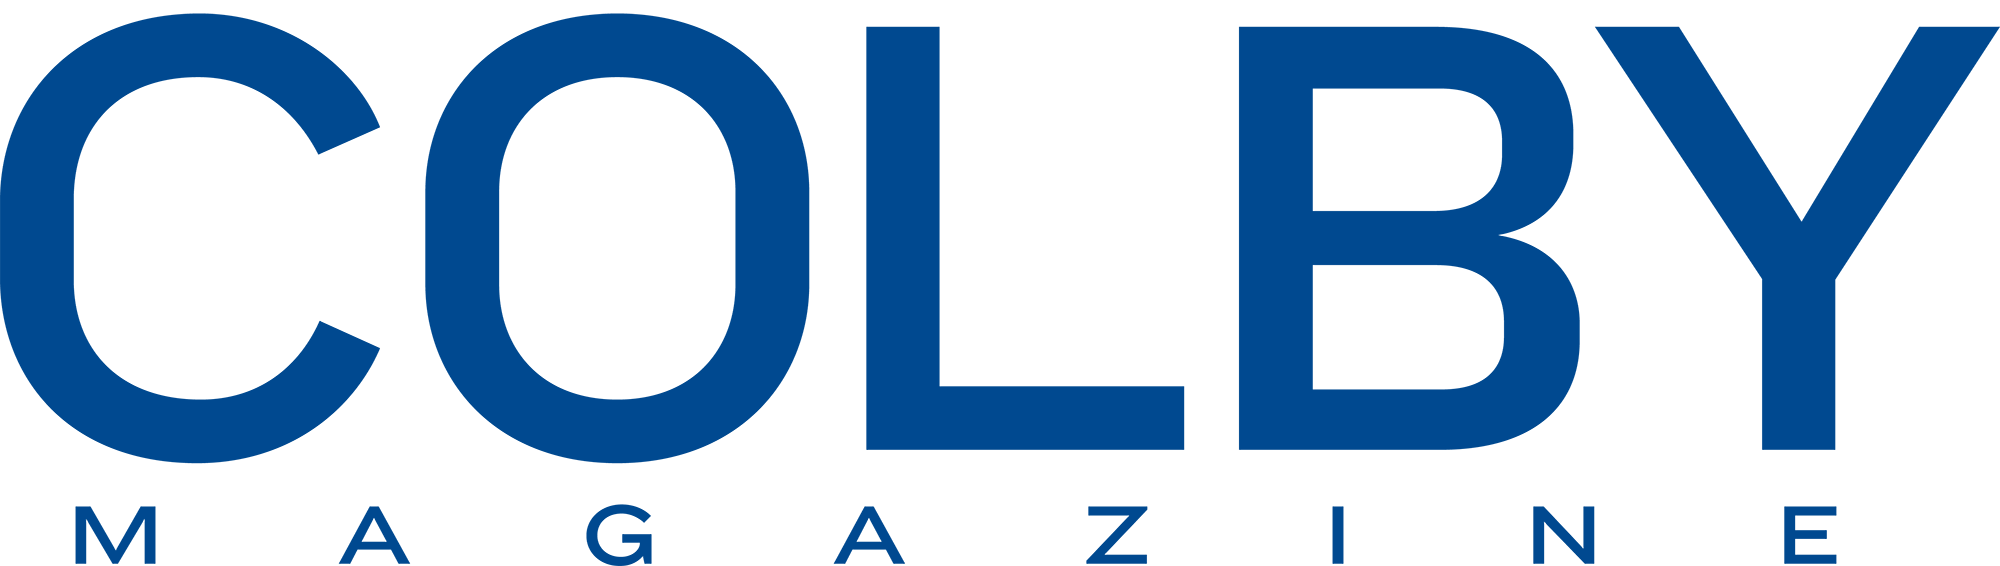 Colby Magazine logo